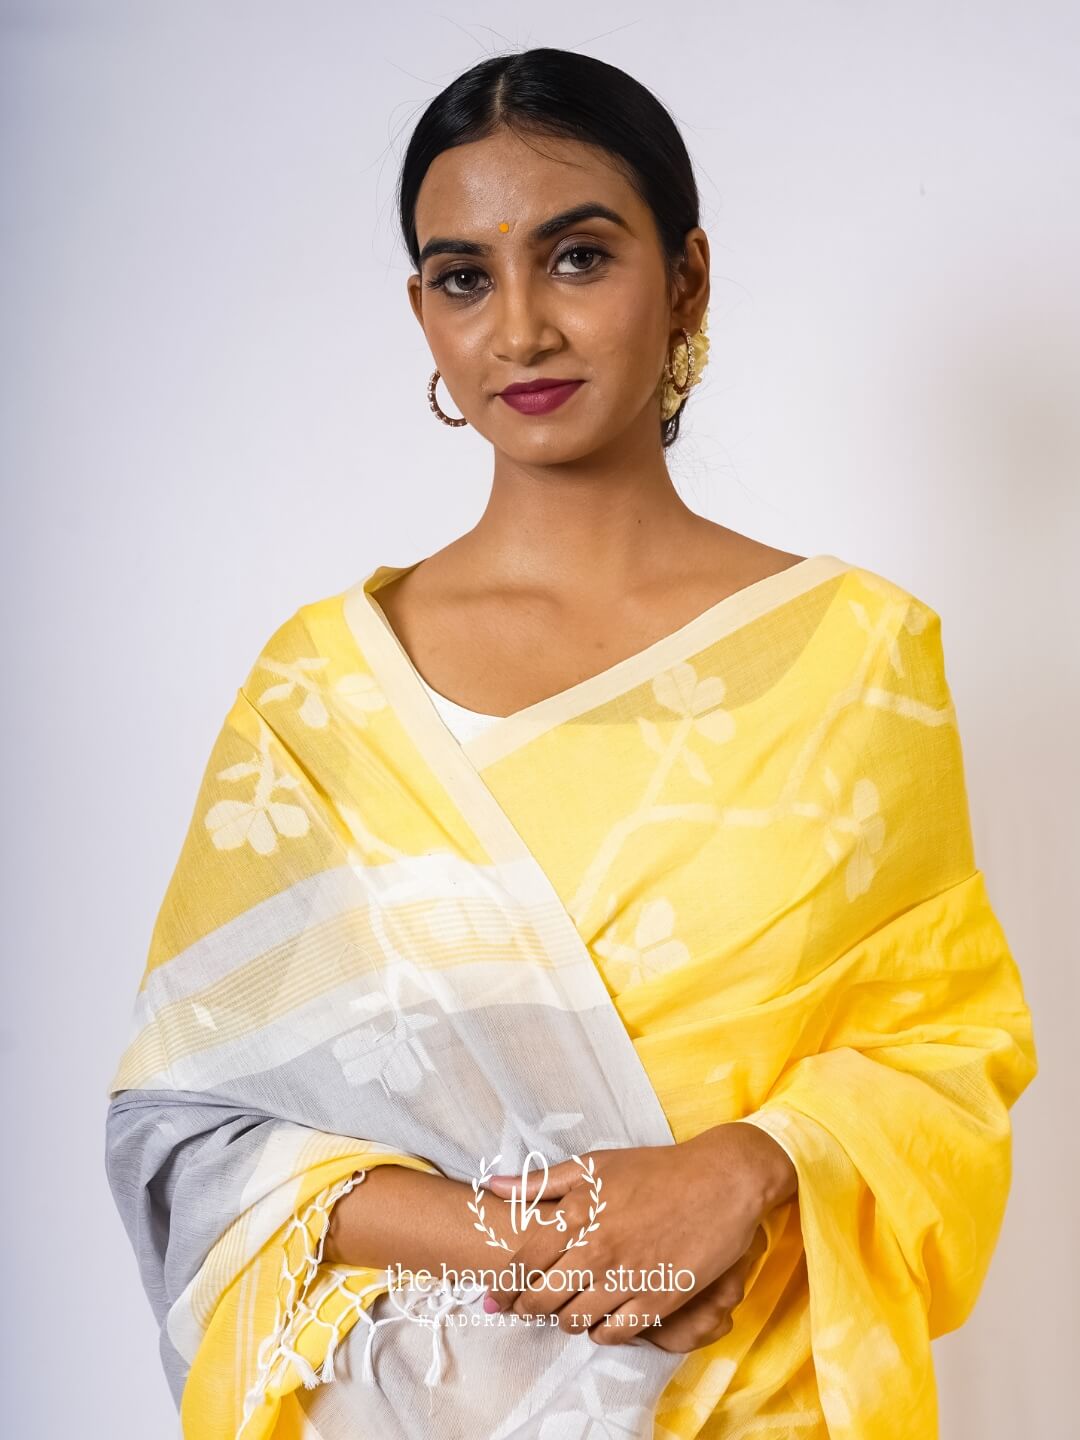 Handloom Yellow cotton Jamdani saree